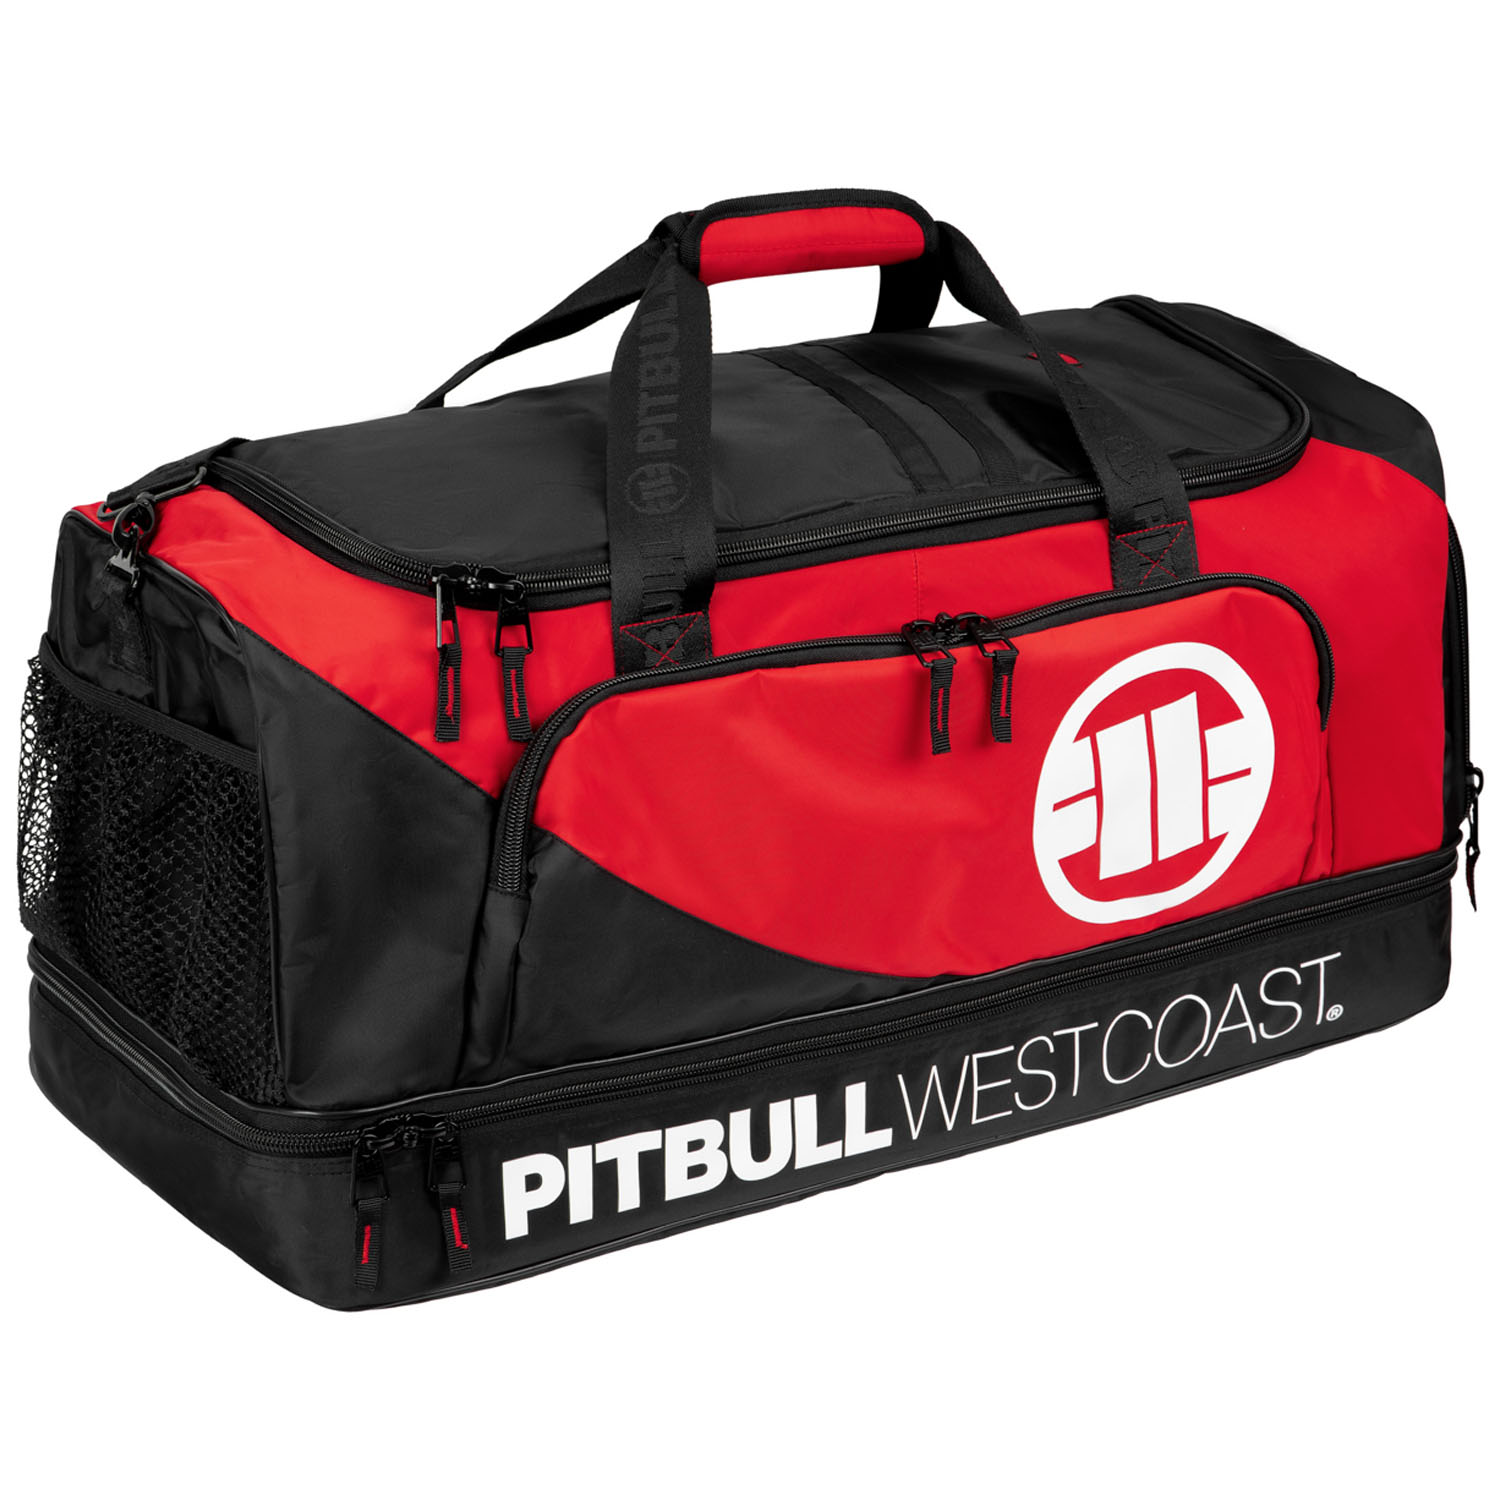 Pit Bull West Coast Sporttasche, Big Duffle Bag, Logo TNT, schwarz-rot